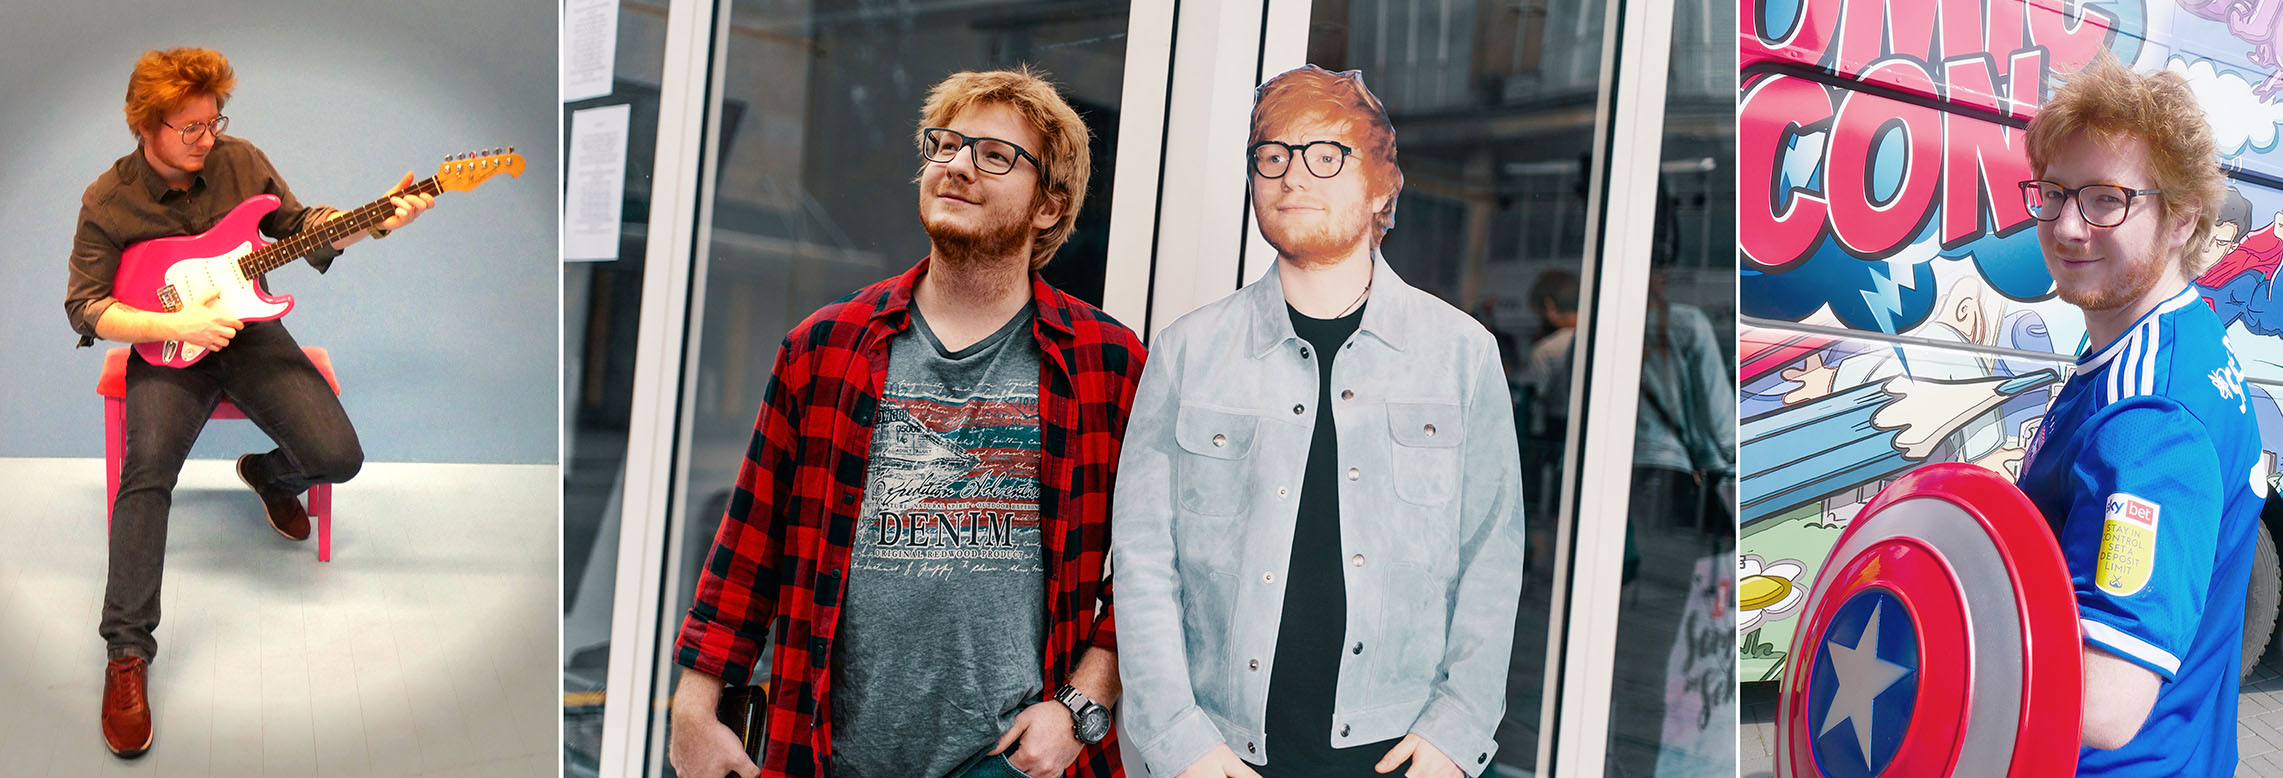 Ed Sheeran Doppelgänger Collage